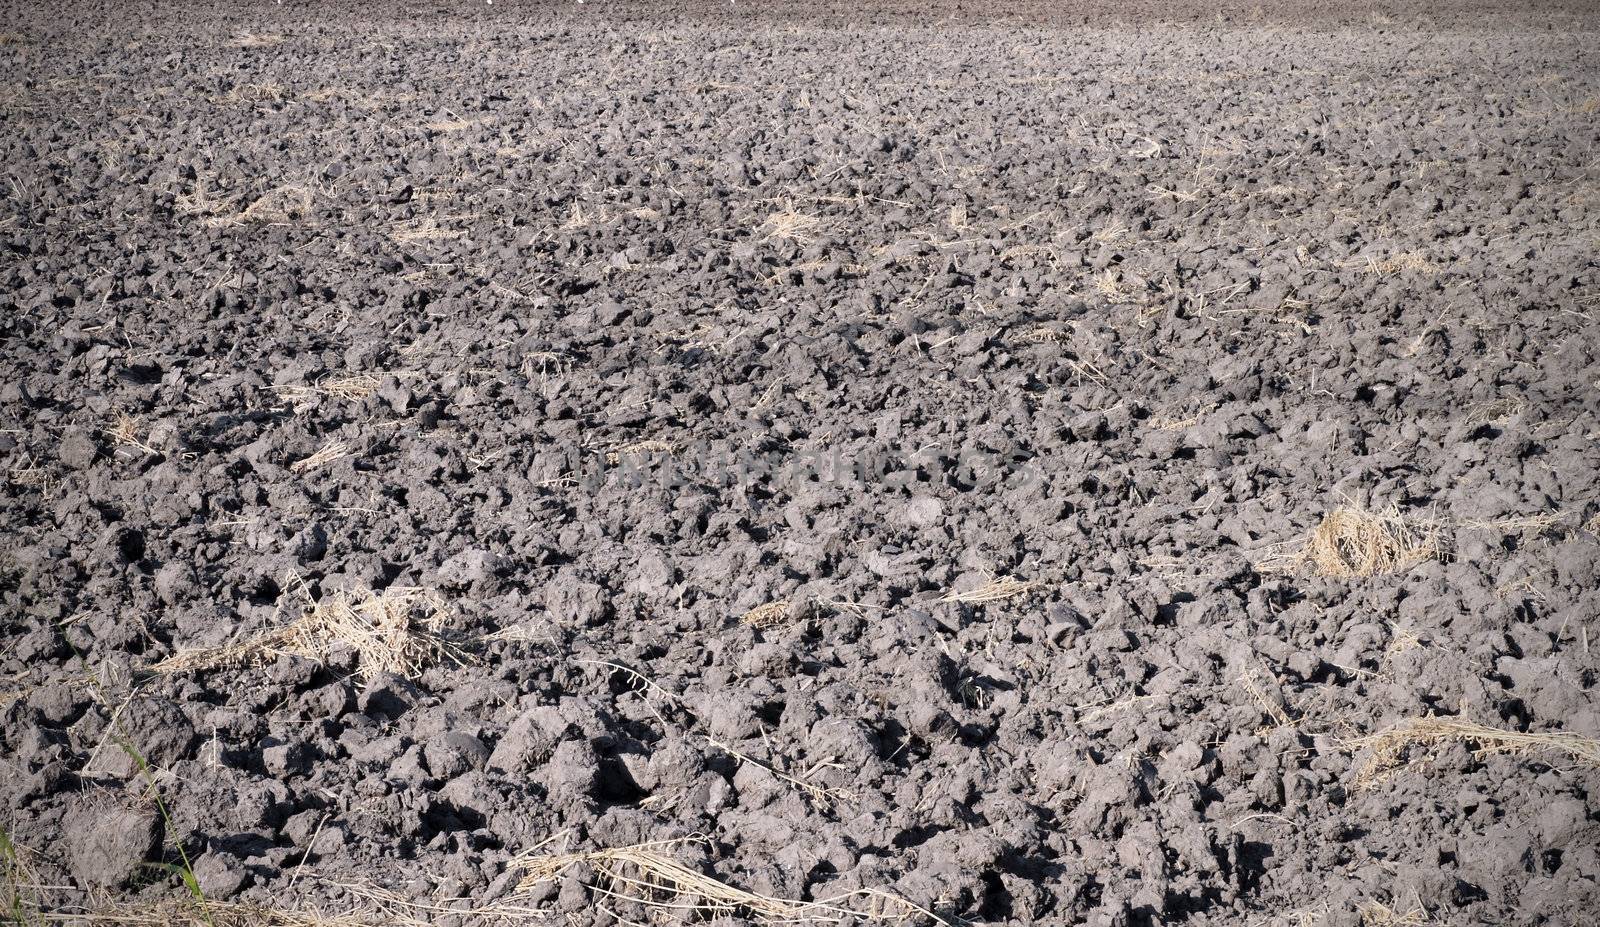 fertile, plowed soil of an agricultural field by geargodz